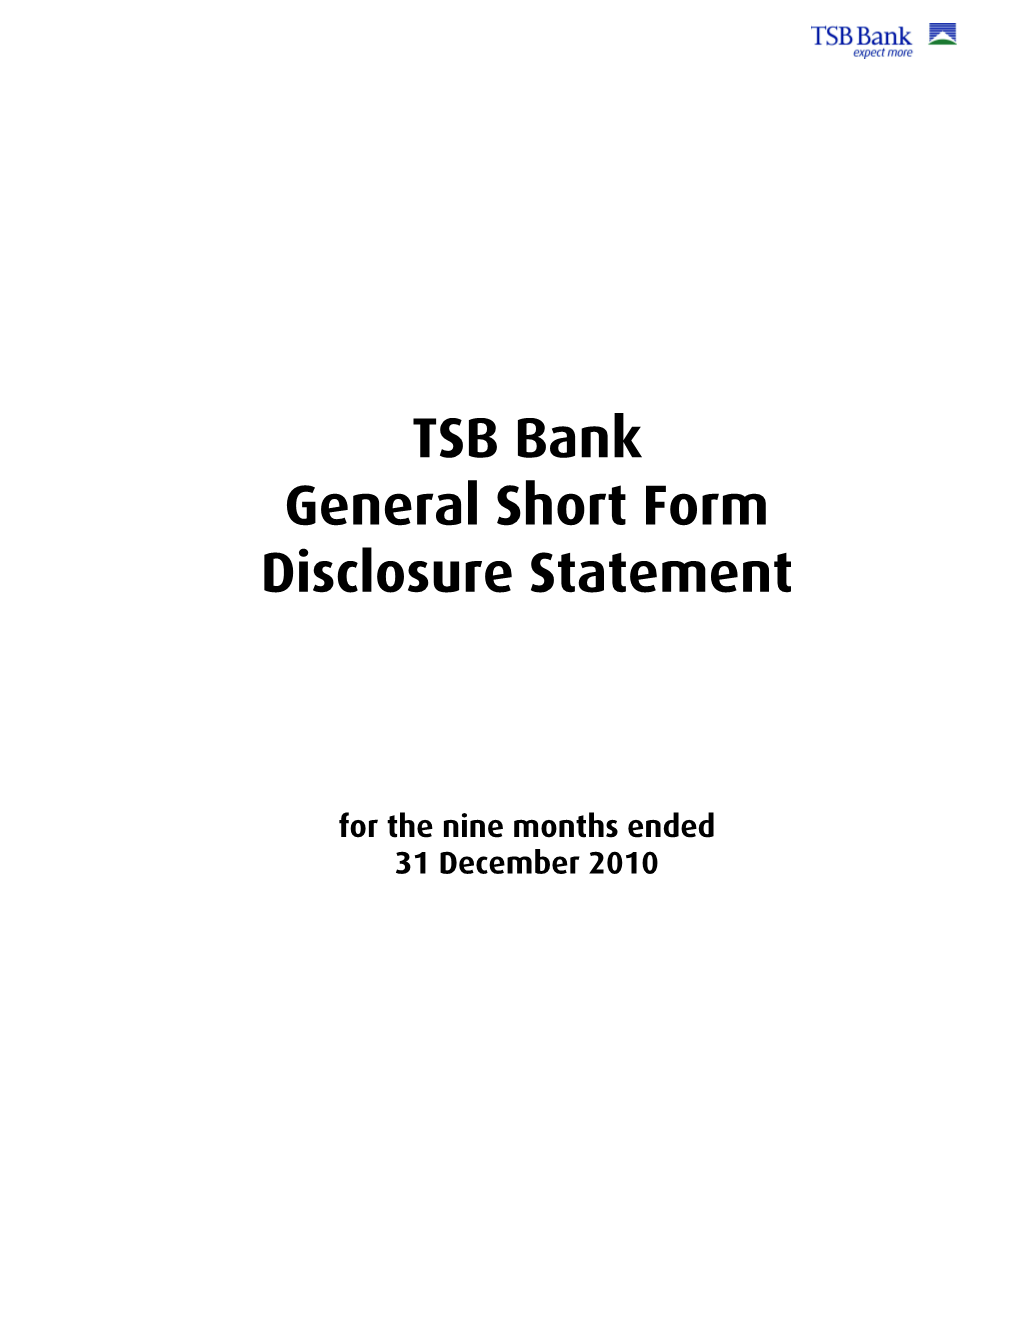 TSB Bank General Short Form Disclosure Statement